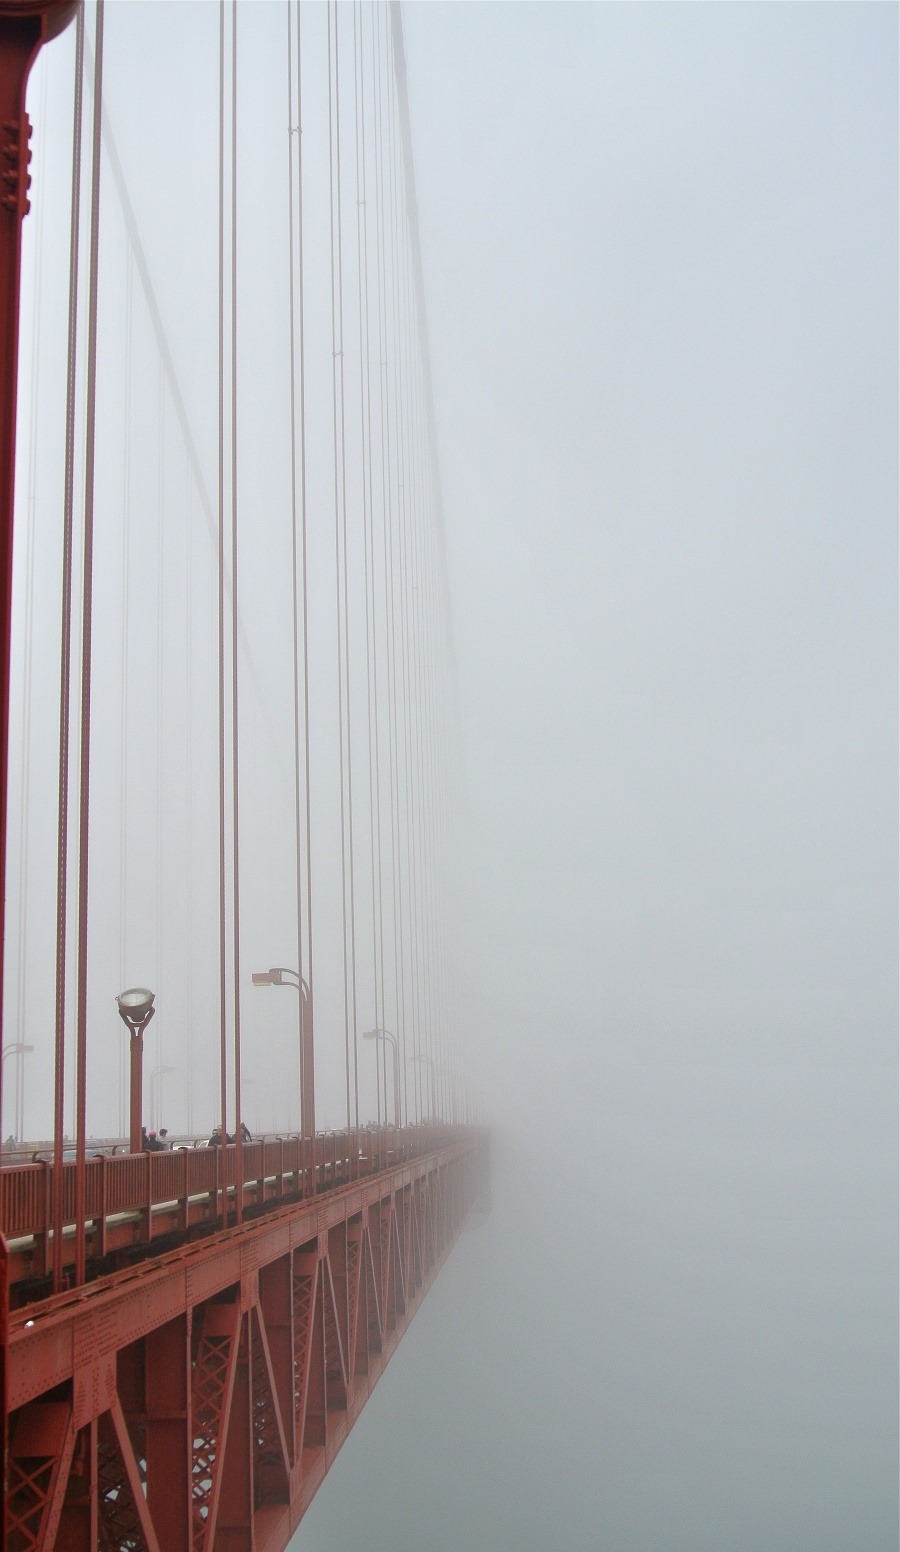 Golden Gate Bridge, San